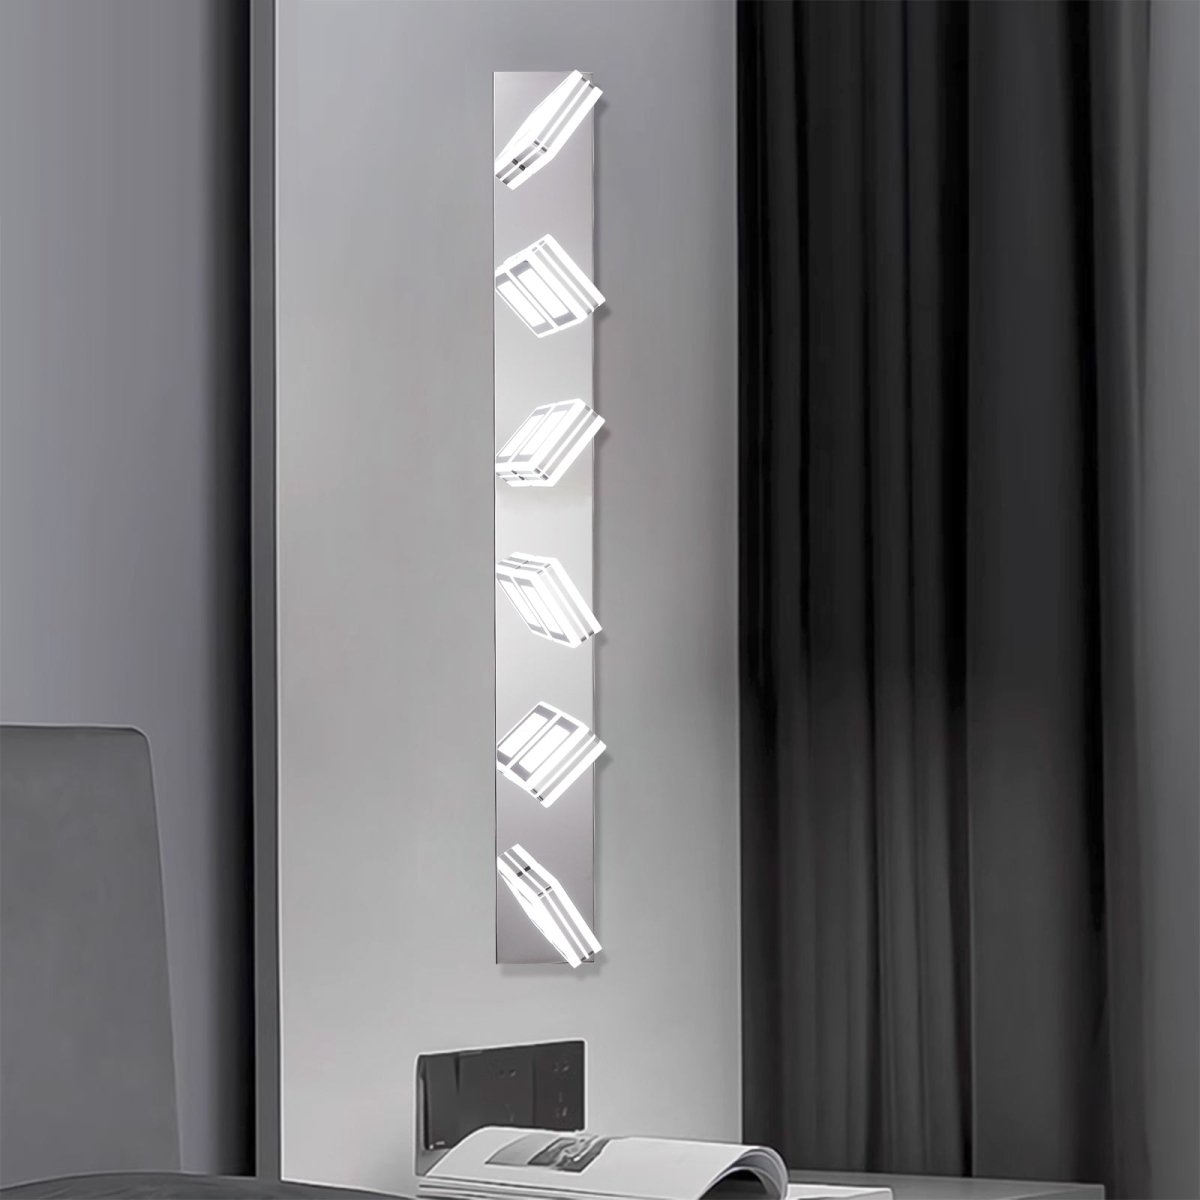 ExBrite LED Modern Chrome Makeup Light, 6-Lights Acrylic Chrome Makeup Mirror Light